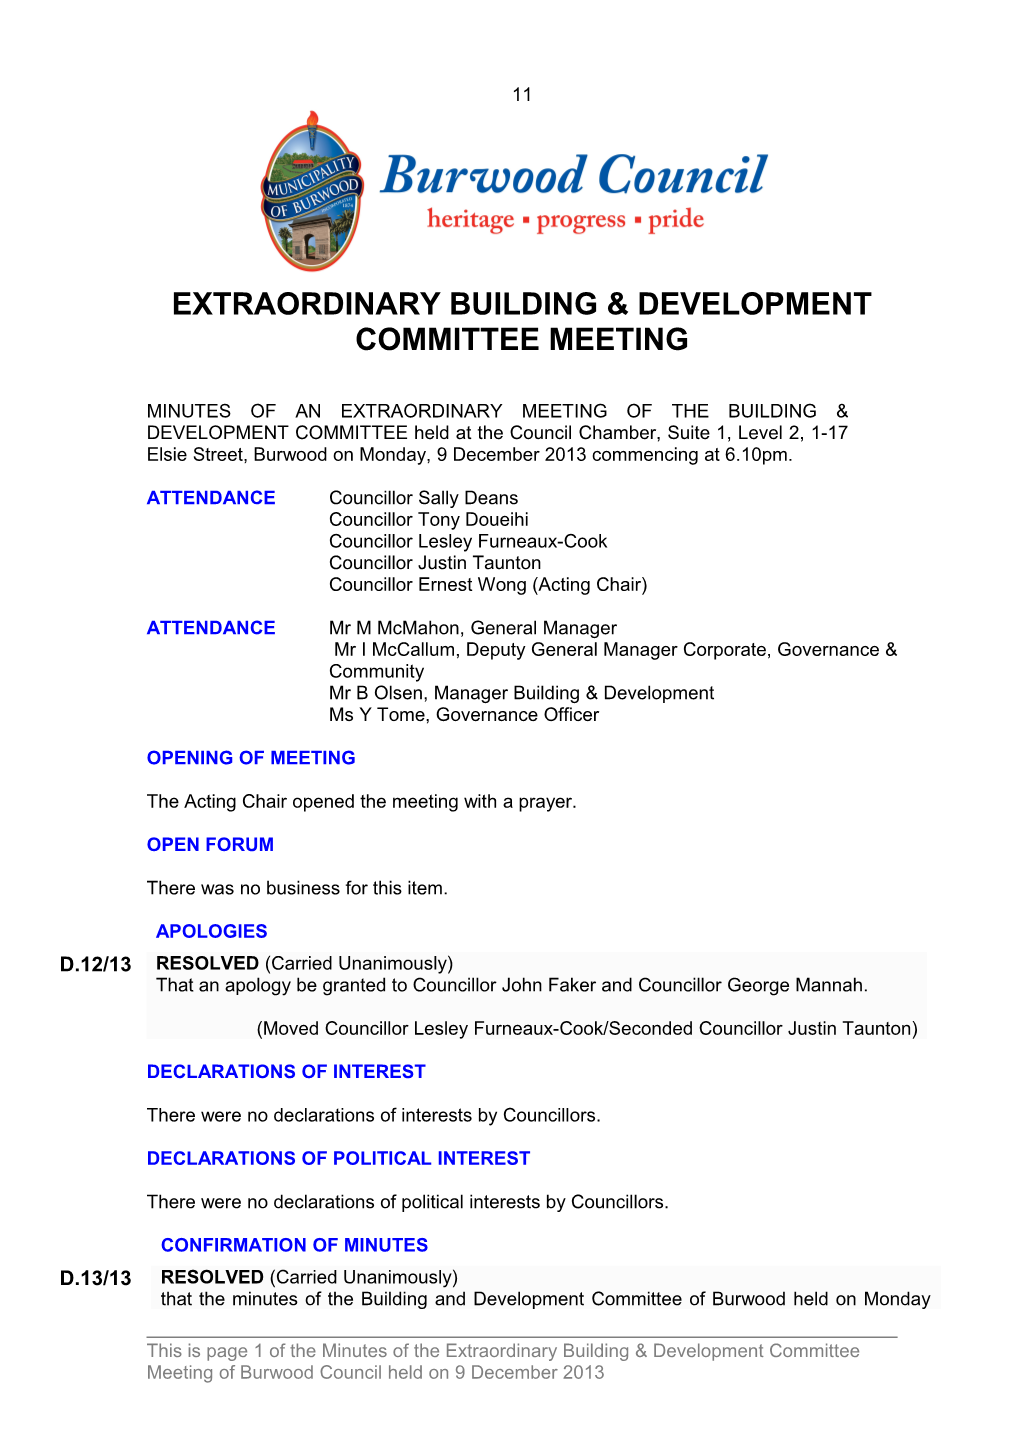 Pro-Forma Minutes of Extraordinary Building & Development Committee Meeting - 9 December 2013